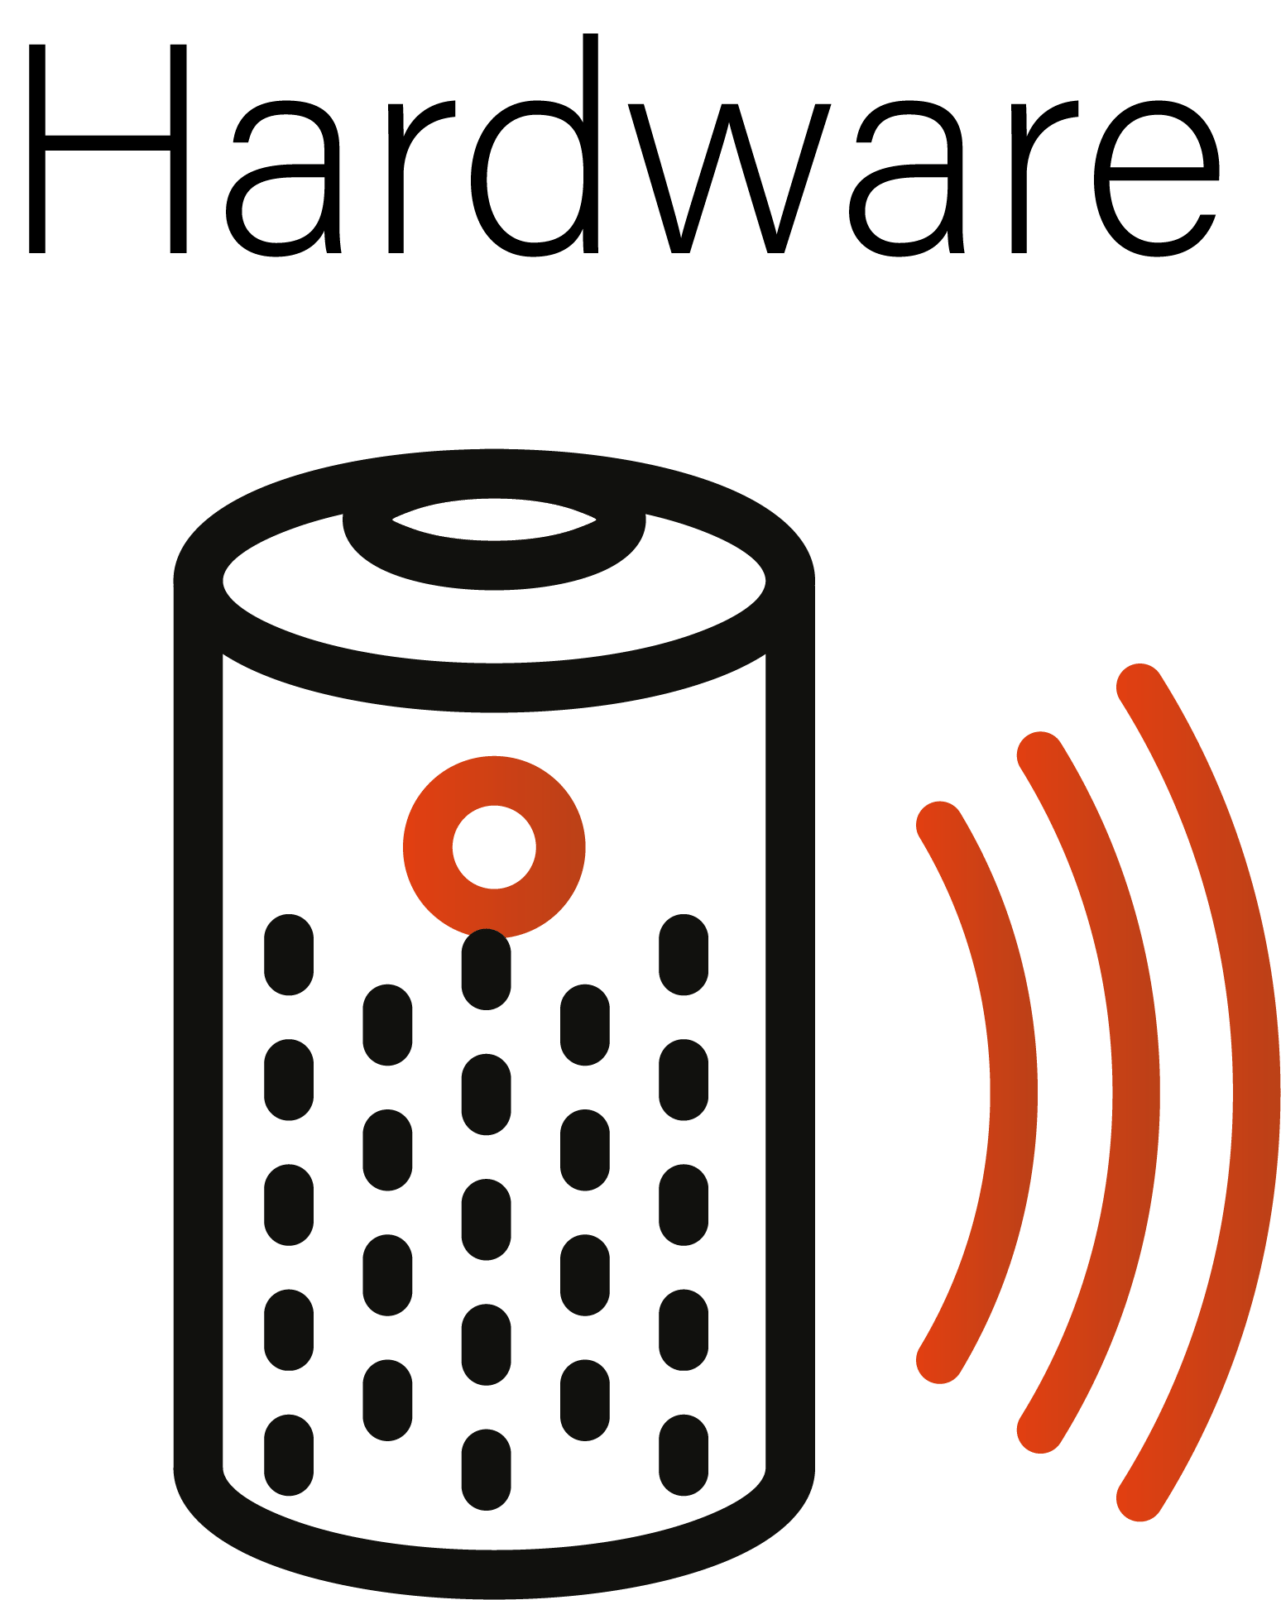 Hardware logo